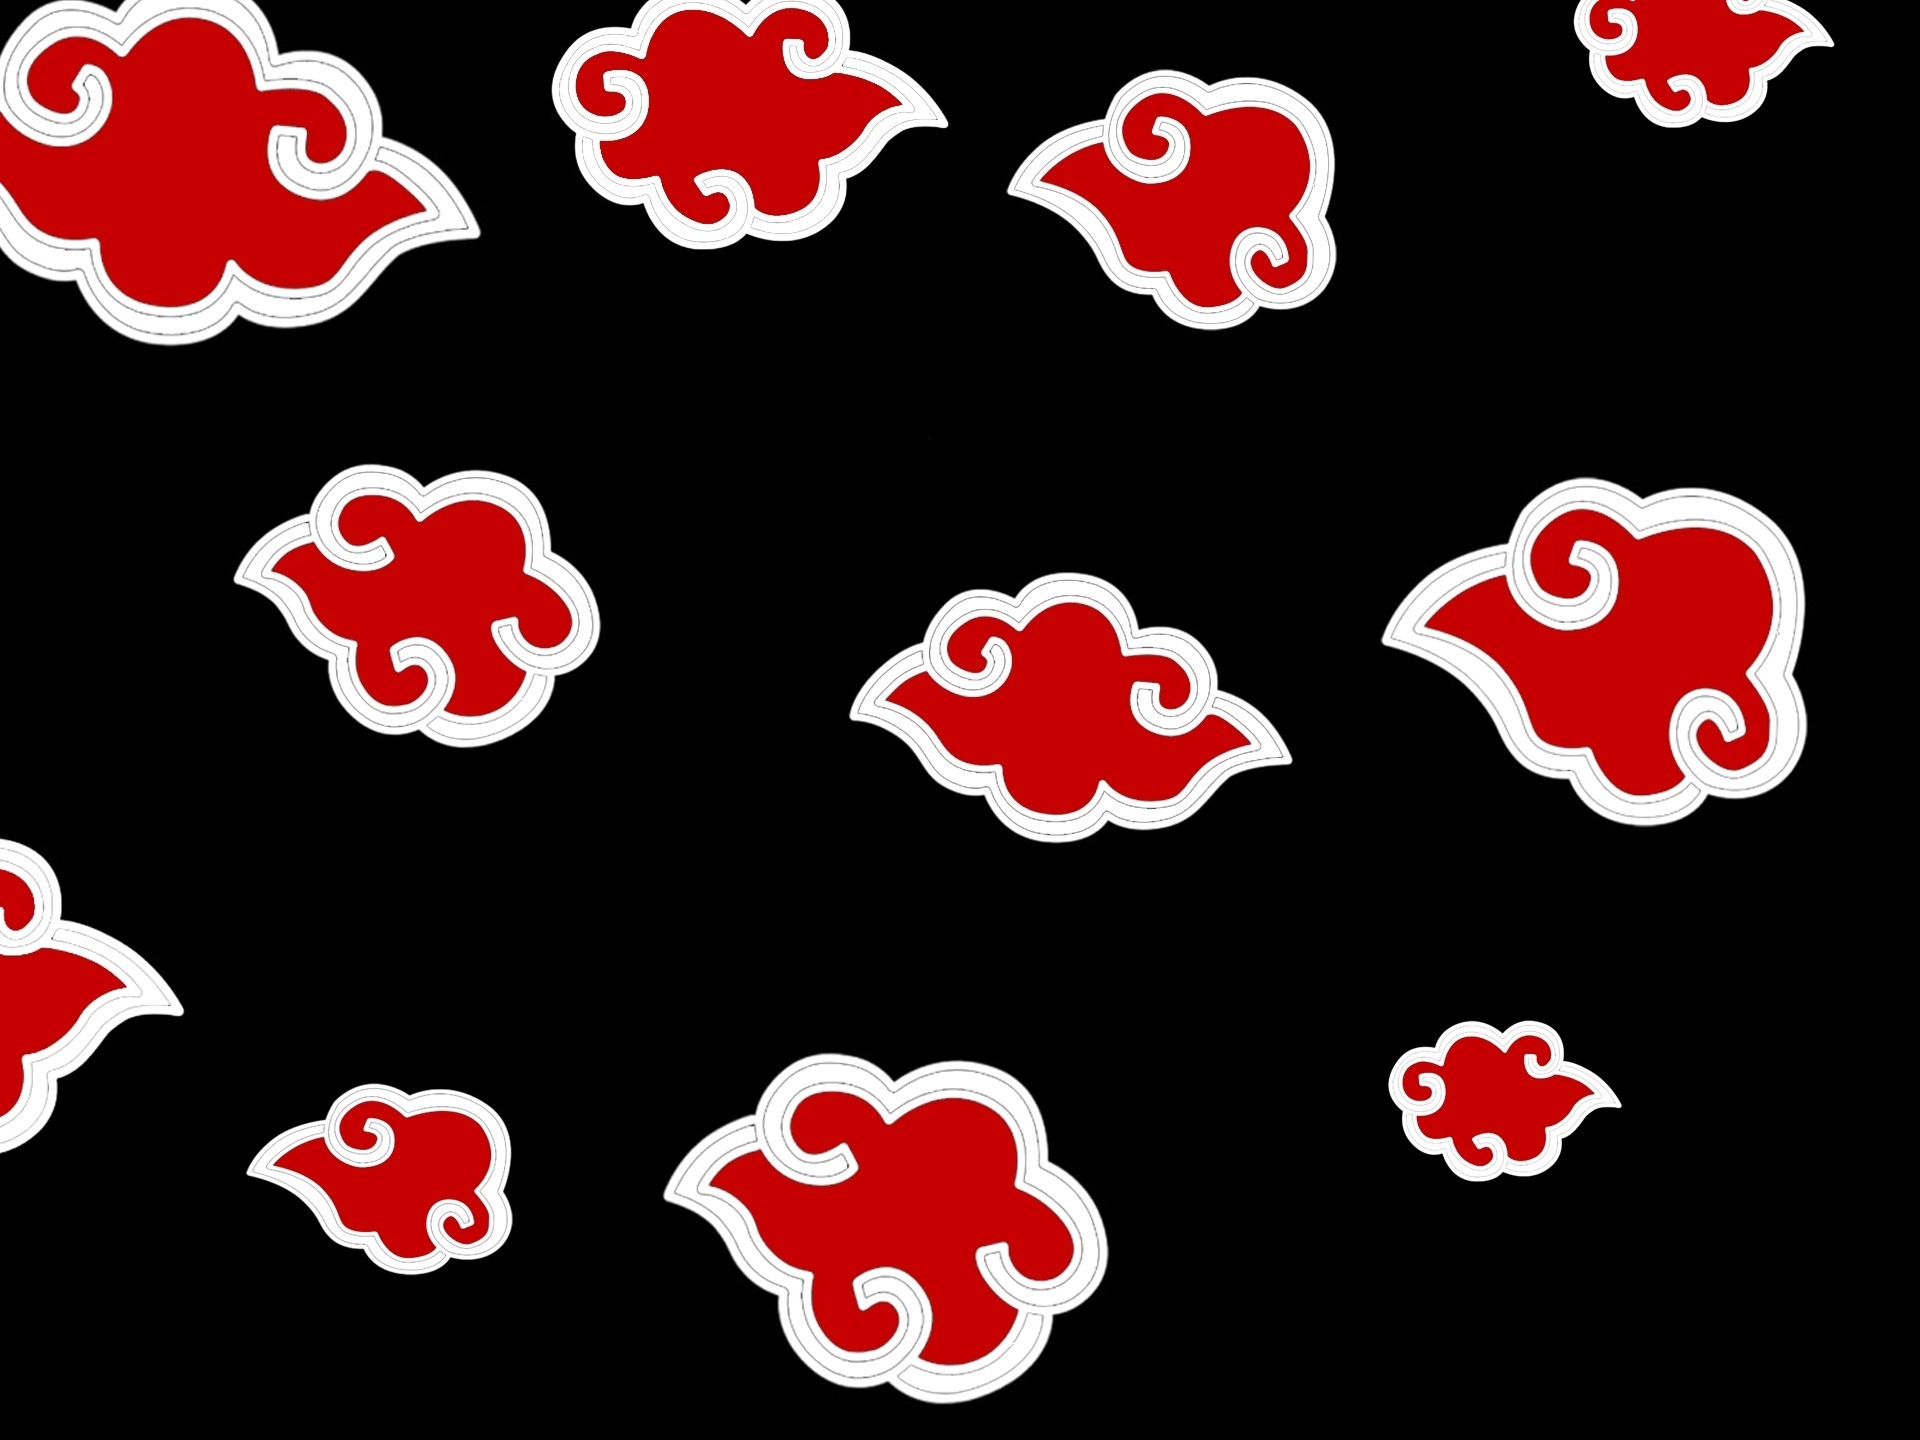 Abstract clouds red patterns naruto shippuden akatsuki wallpaper